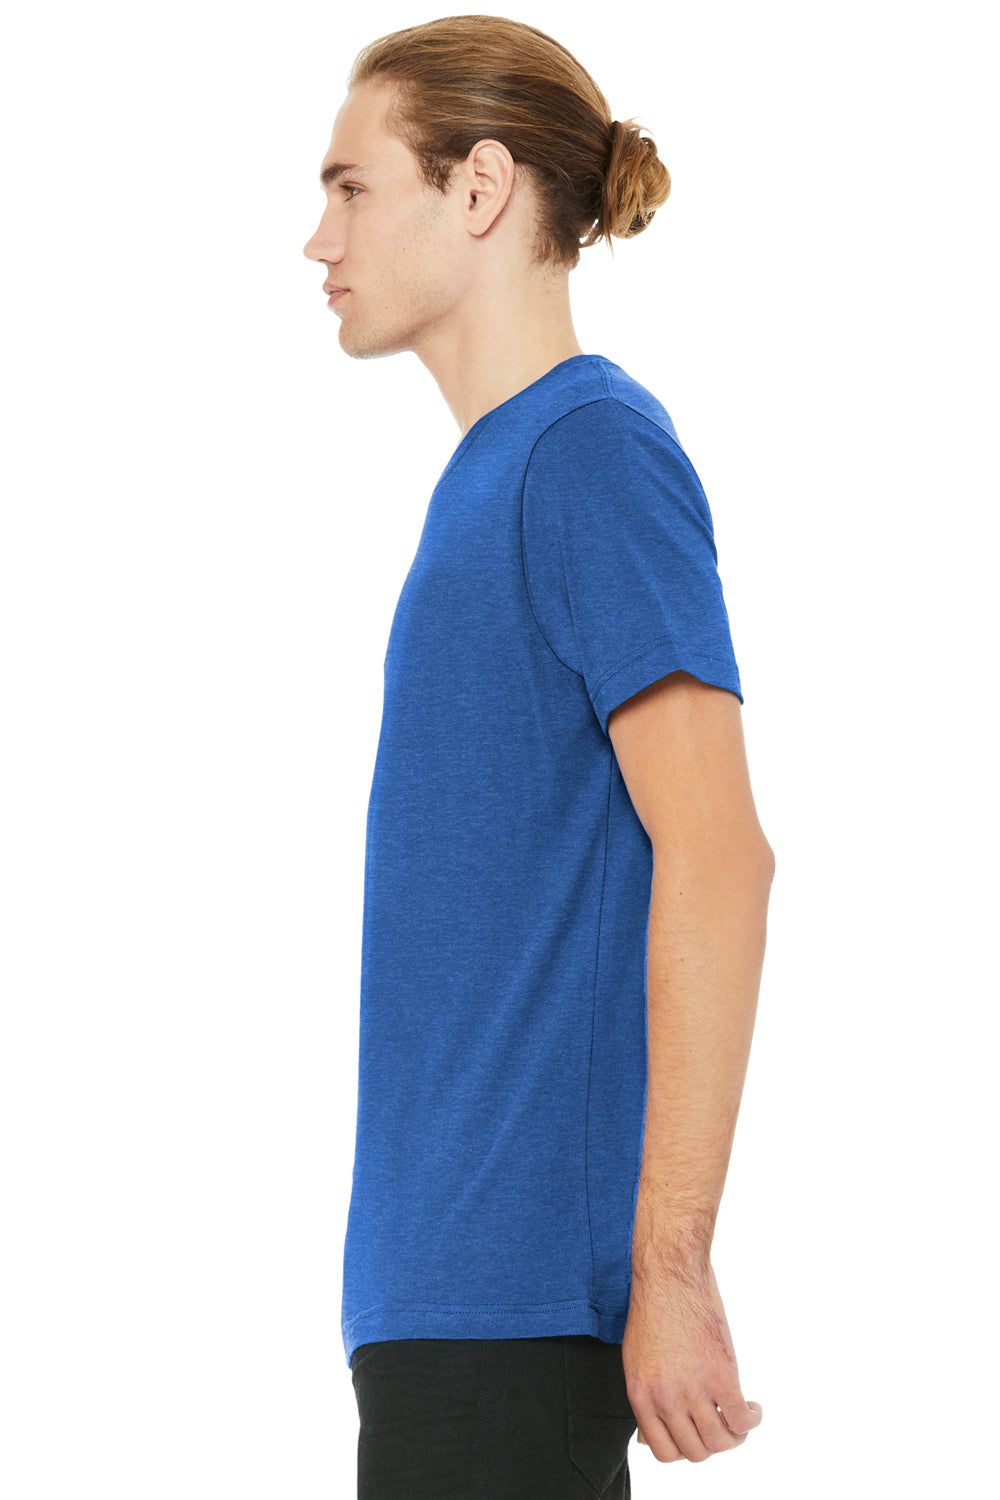 Bella + Canvas BC3005CVC Mens CVC Short Sleeve V-Neck T-Shirt Heather True Royal Blue Model Side